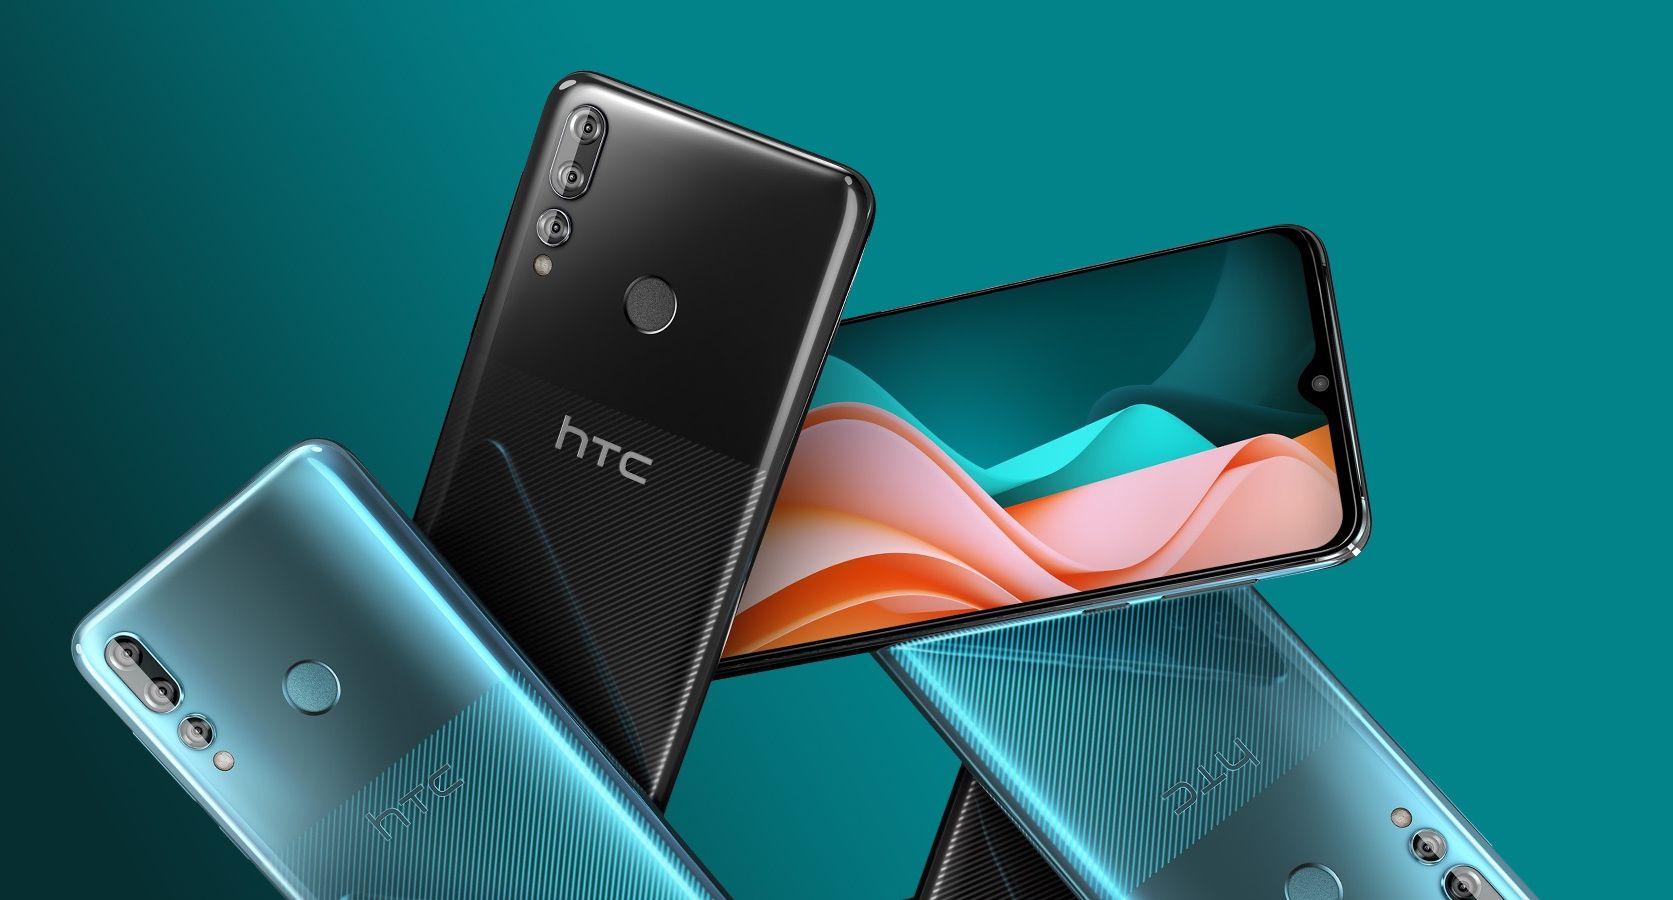 HTC records a surge in revenue in June 2020, thanks to the Desire 20 Pro